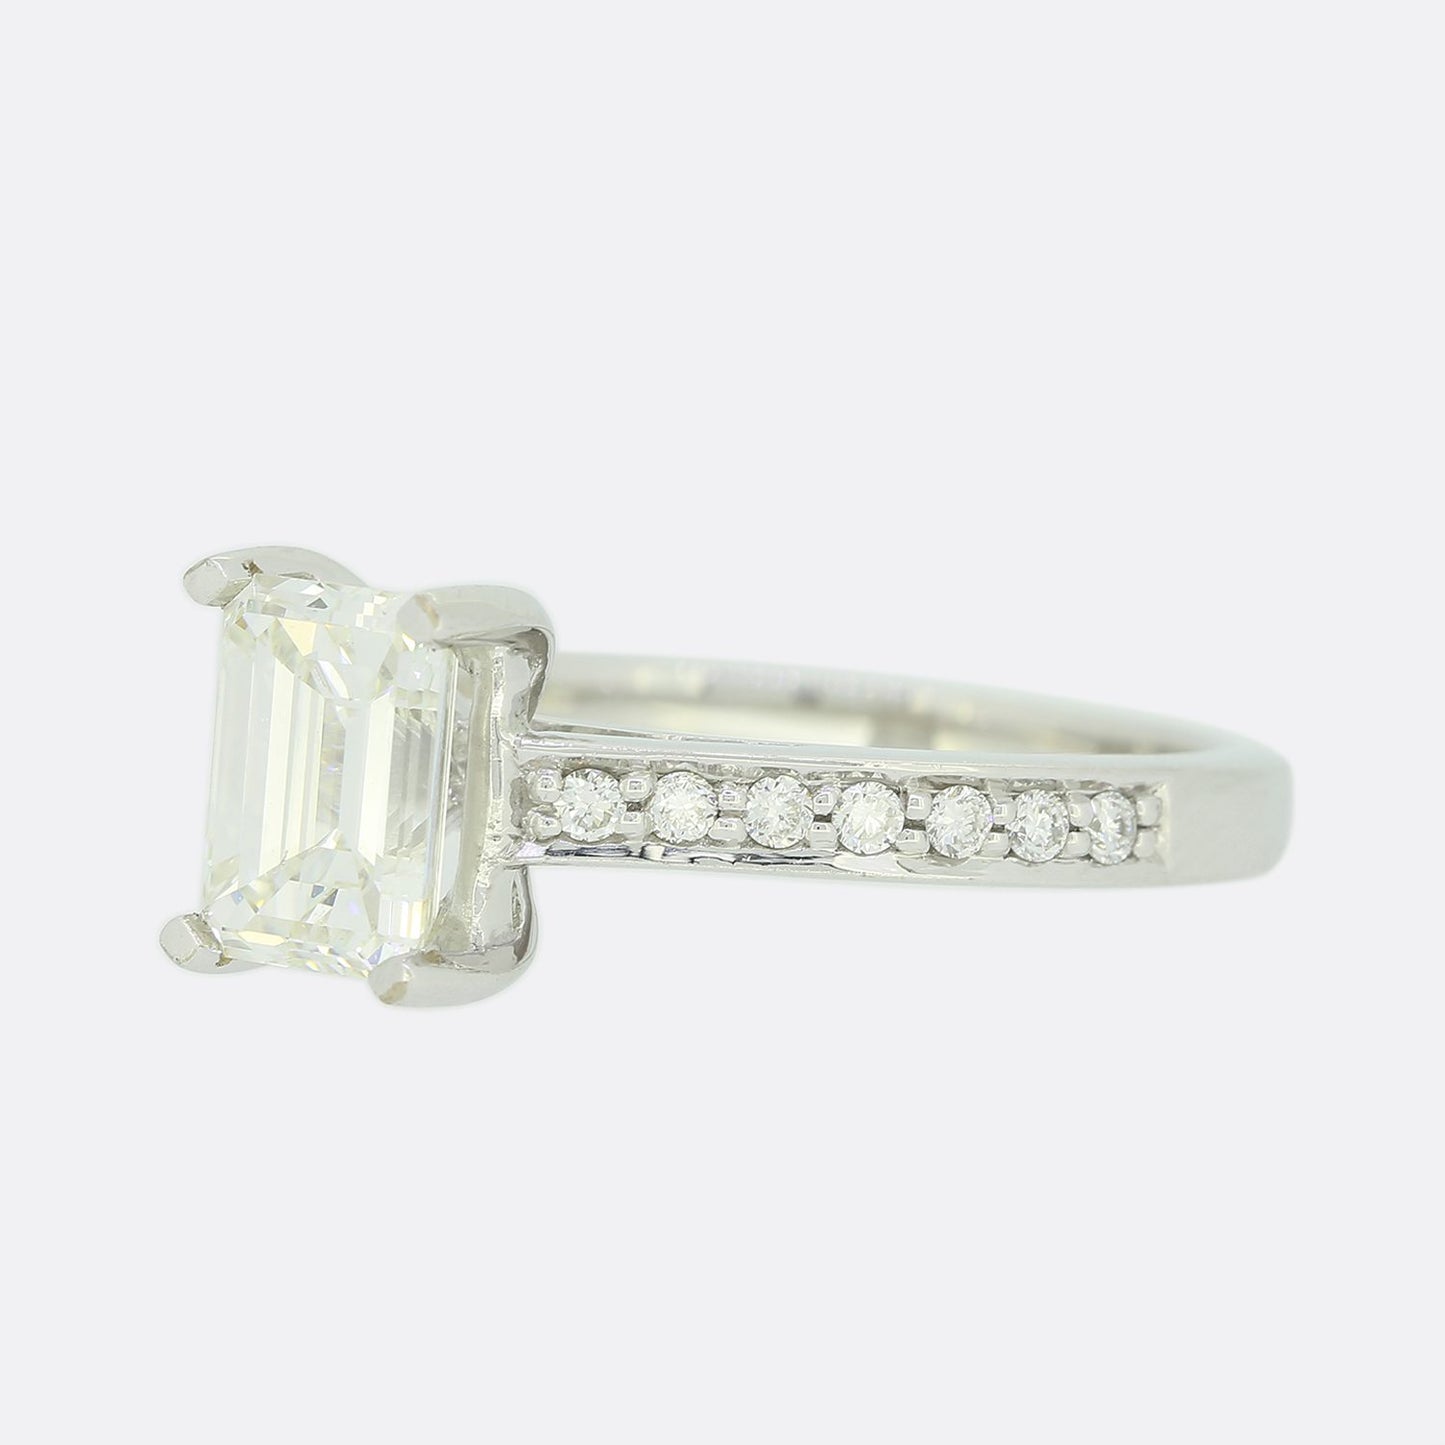 1.60 Carat Emerald Cut Diamond Solitaire Engagement Ring